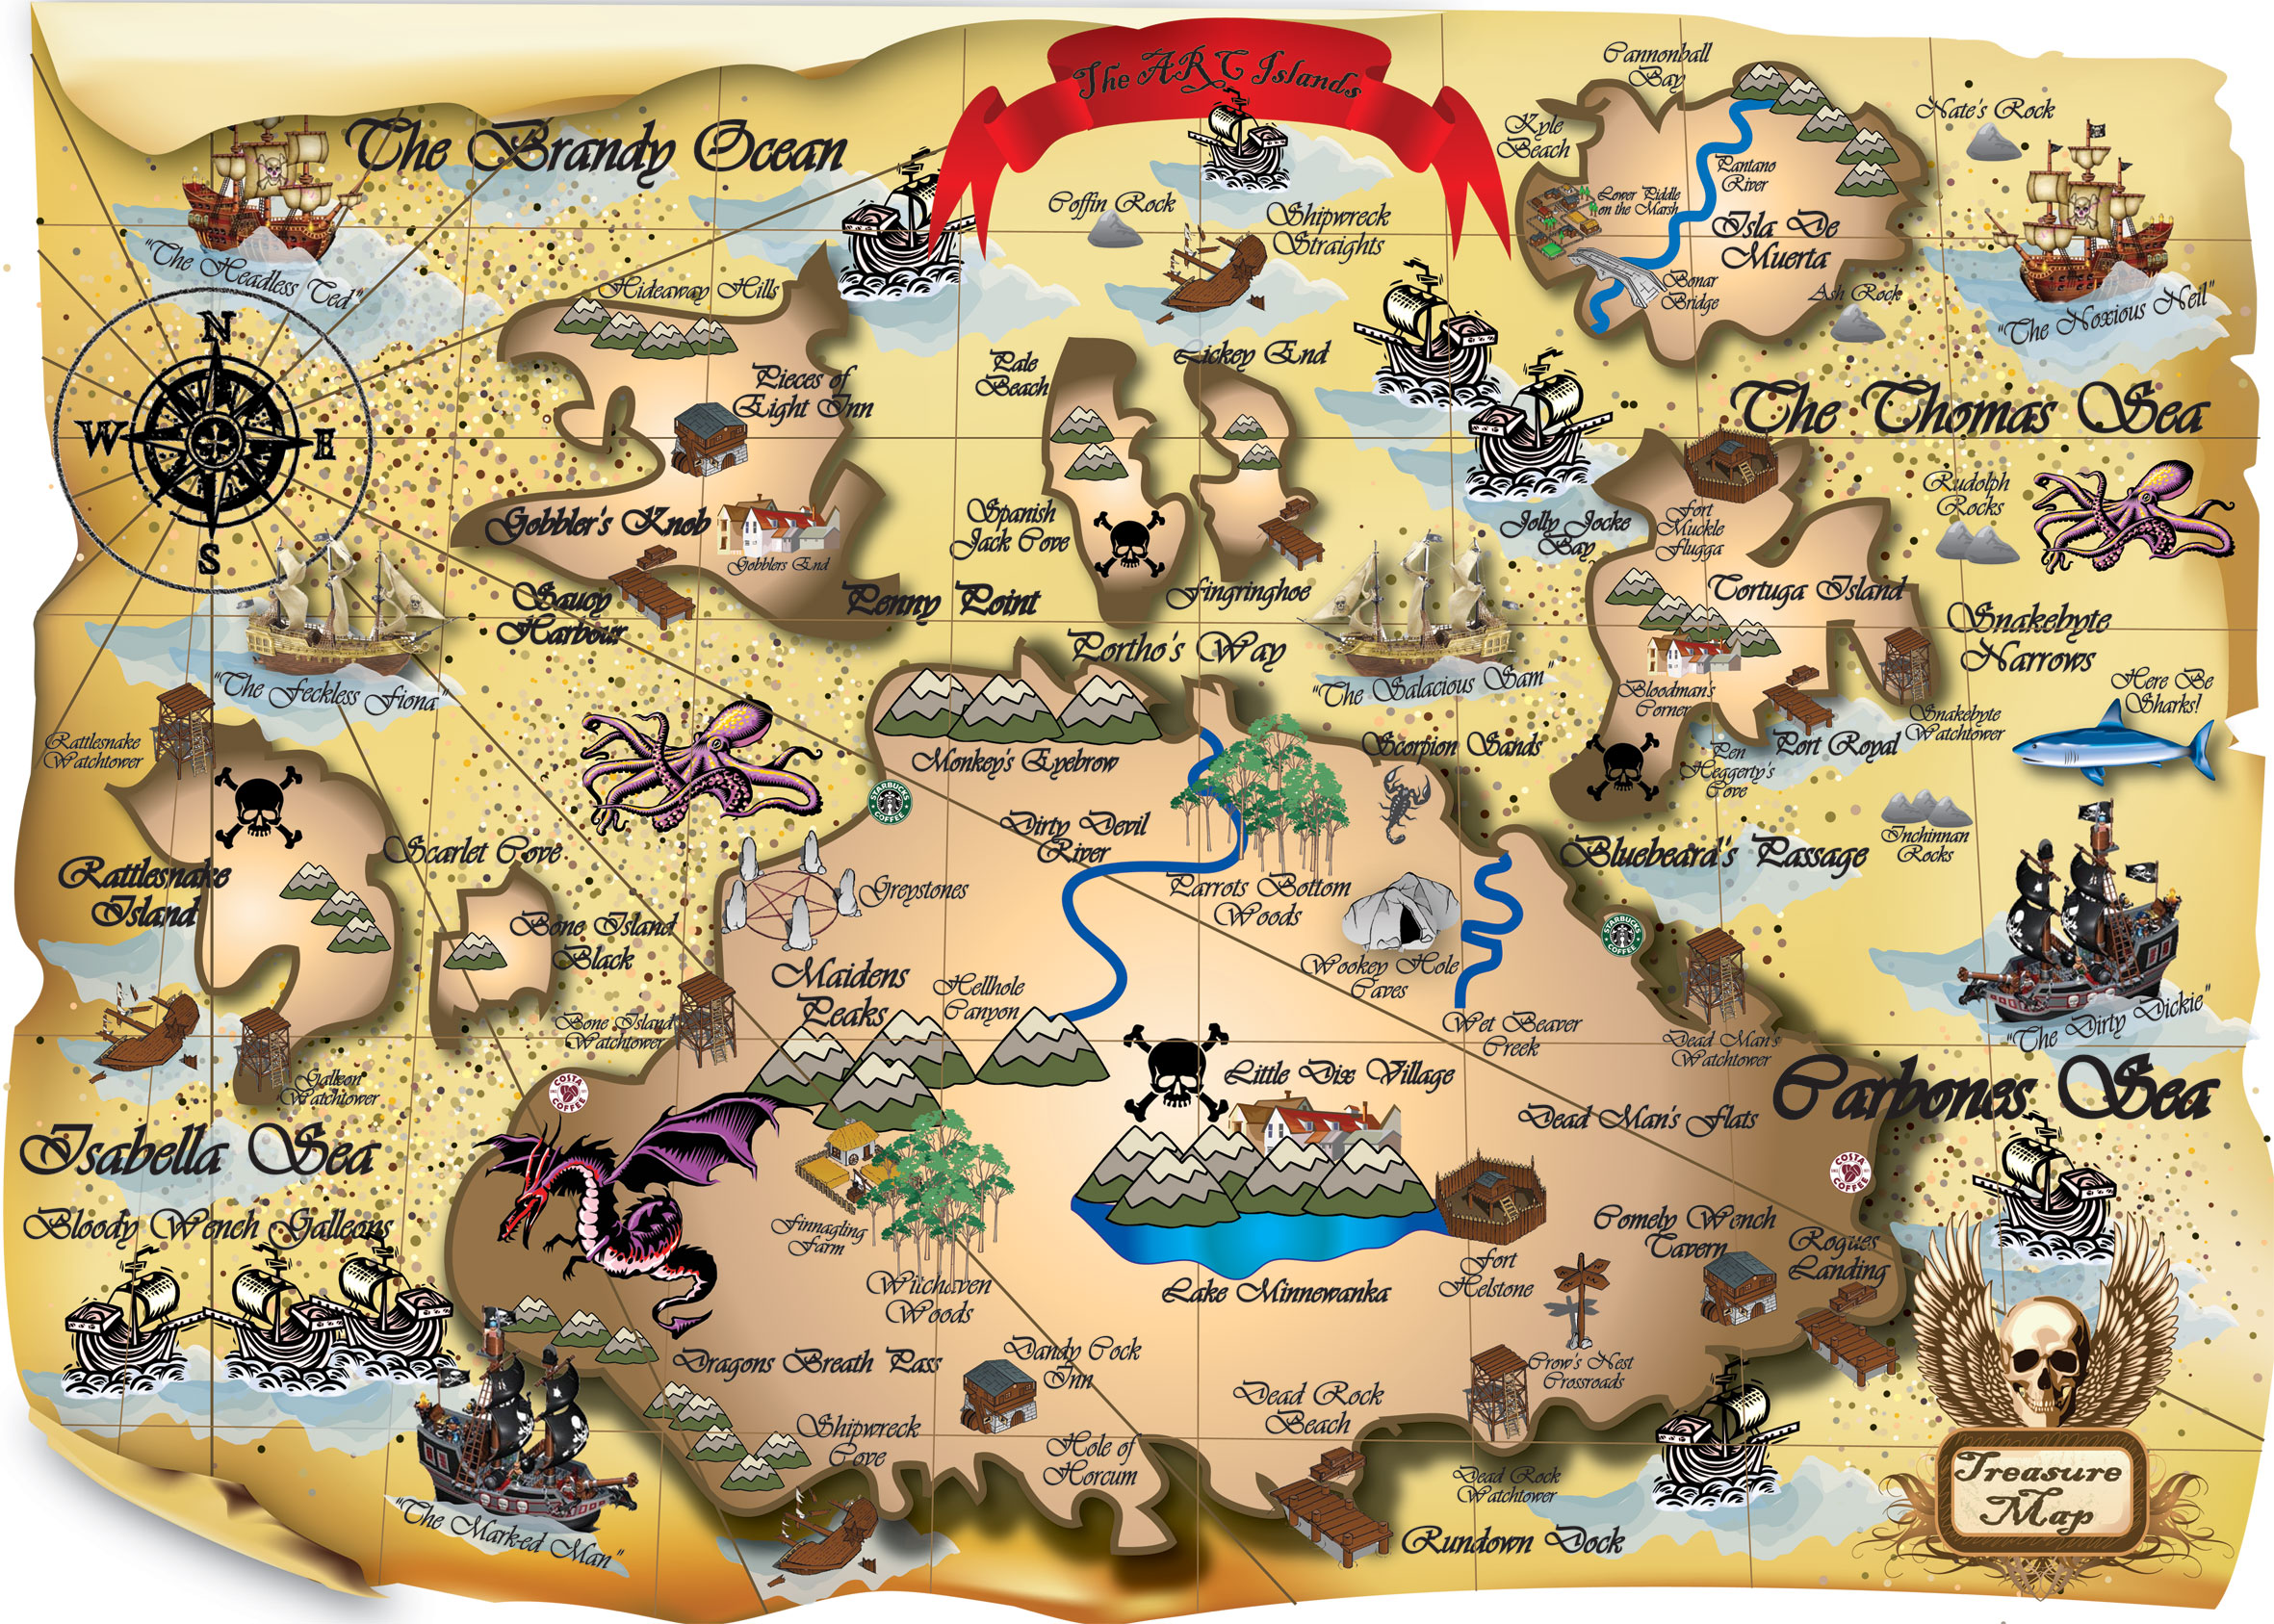 Treasure Map 5